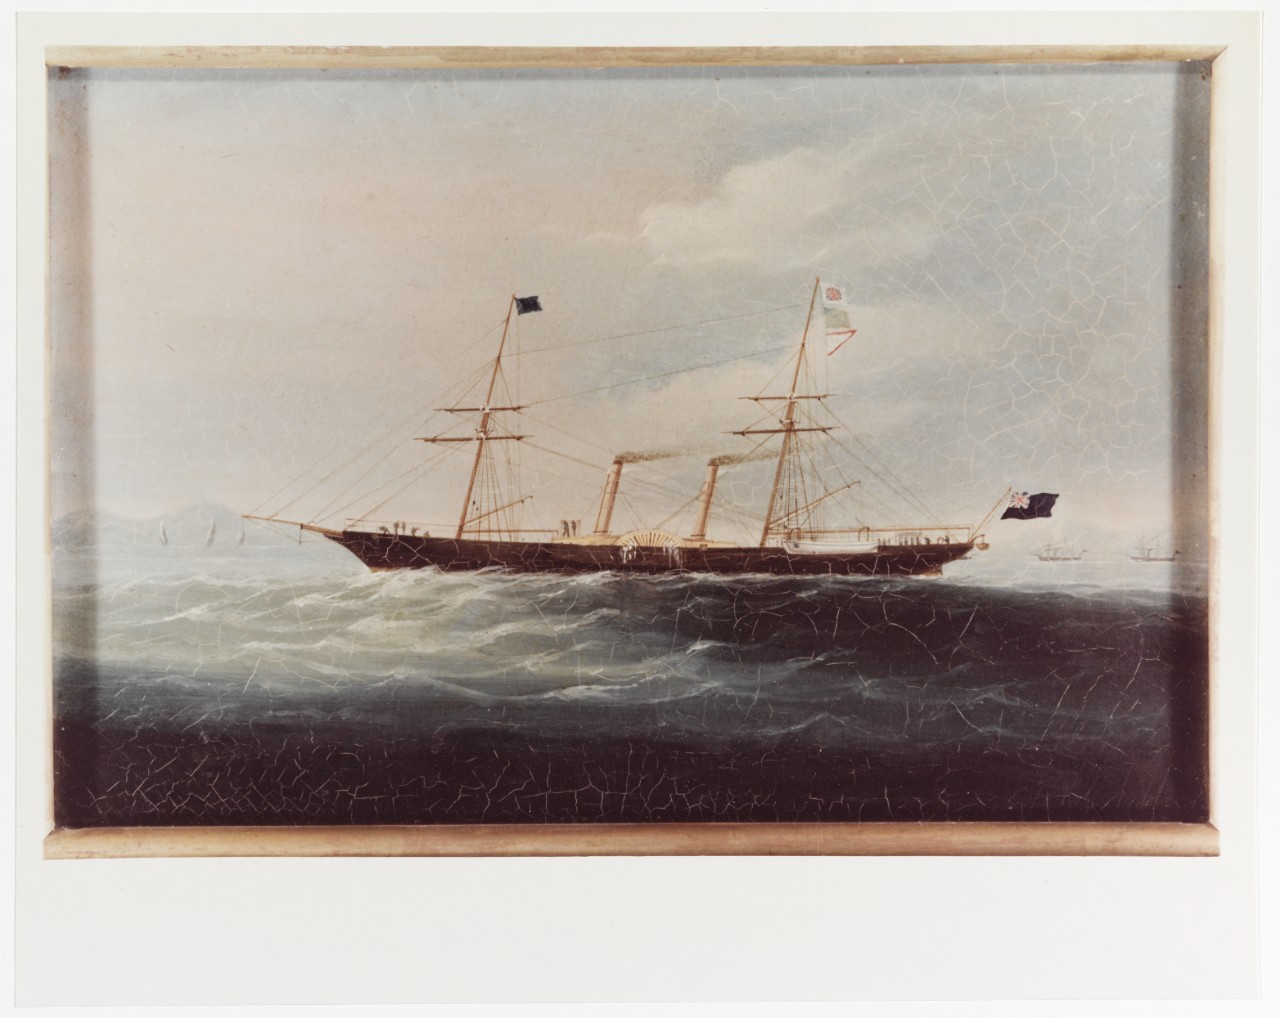 COROMANDEL (British Paddle Despatch Vessel, 1855-66)